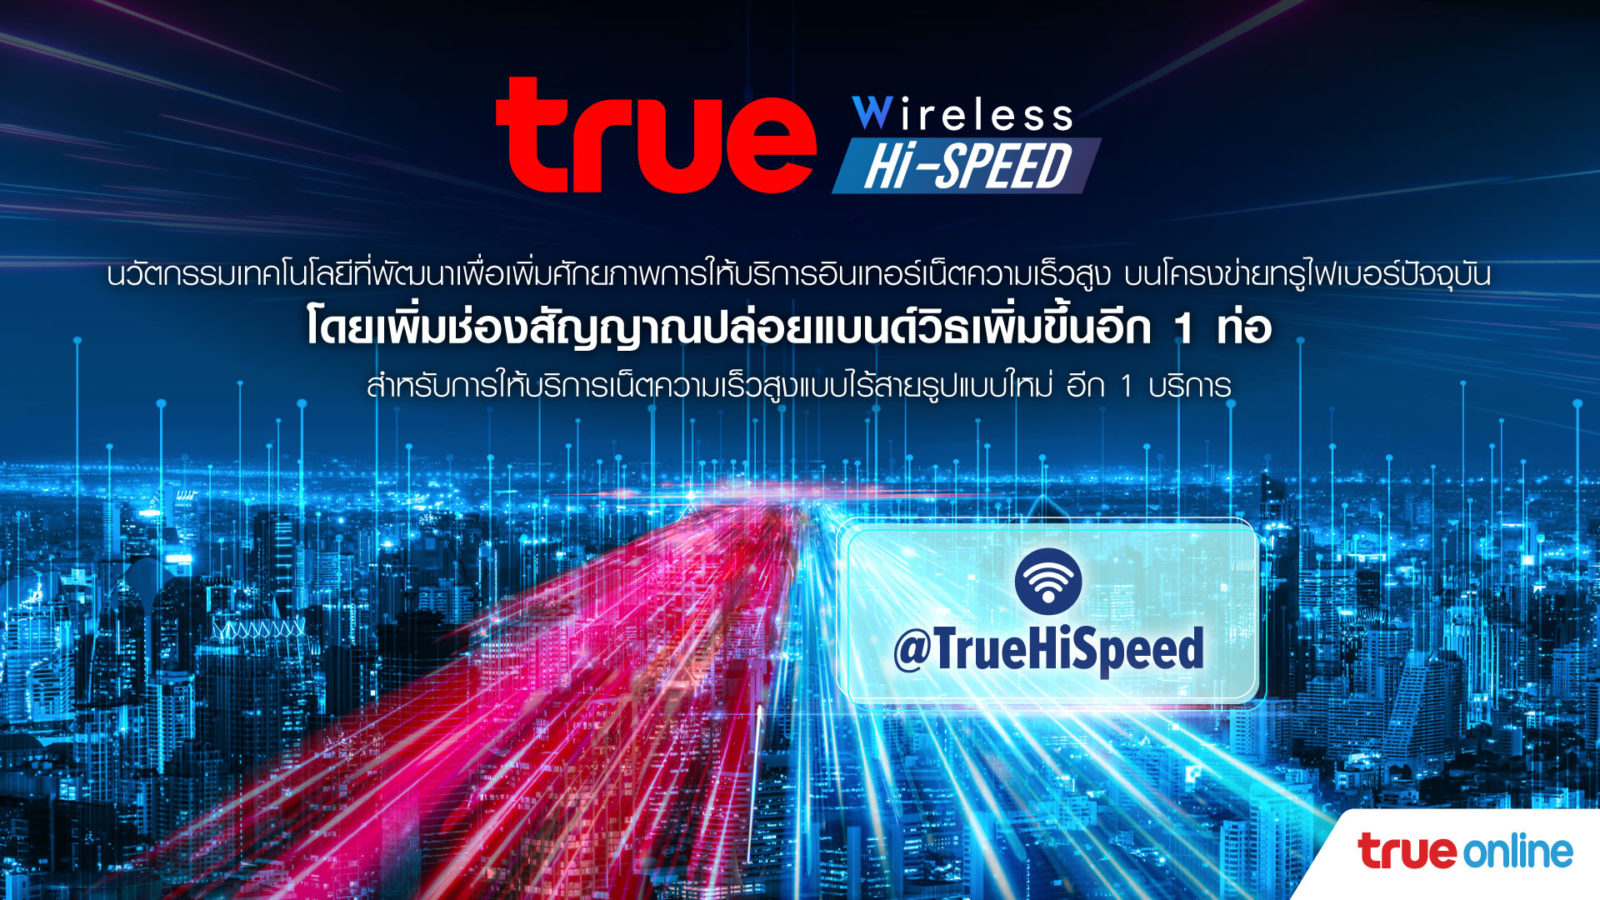 057 3 | @TrueHiSpeed | trueonline เปิดบริการใหม่สุด Prepay True Wireless Hi-Speed เน็ตไร้สายแบบเติมเงิน สะดวก ไม่ต้องติดตั้งไม่ติดสัญญา